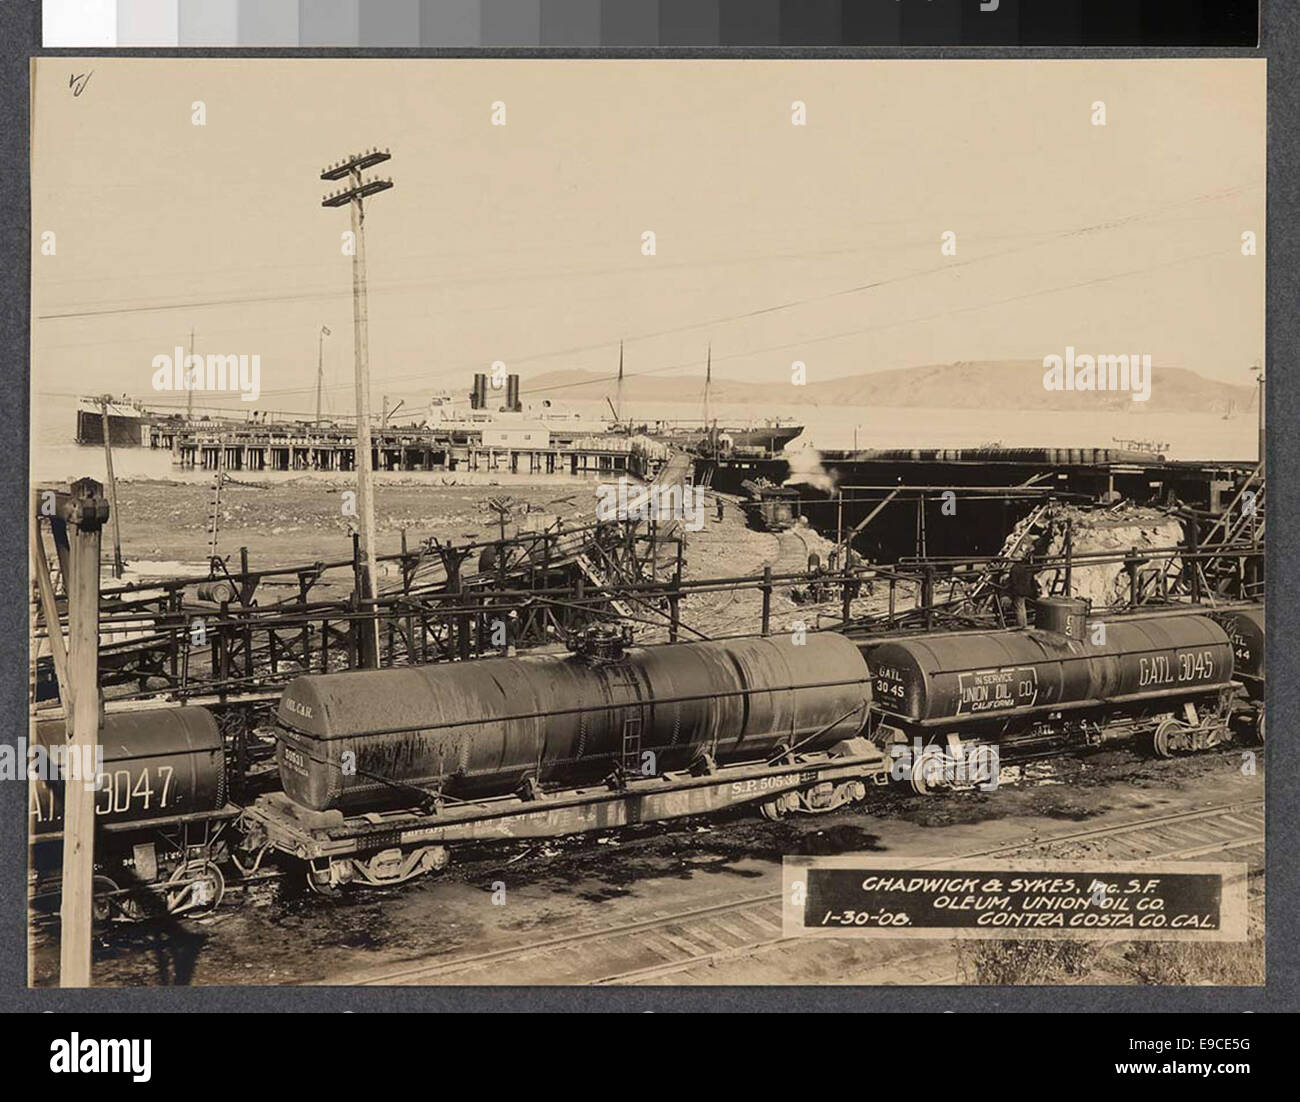 Chadwick & Sykes, Inc., S.F., Oleum, Union Oil Co., Contra Costa Co., CA, 1-30-08 Stock Photo